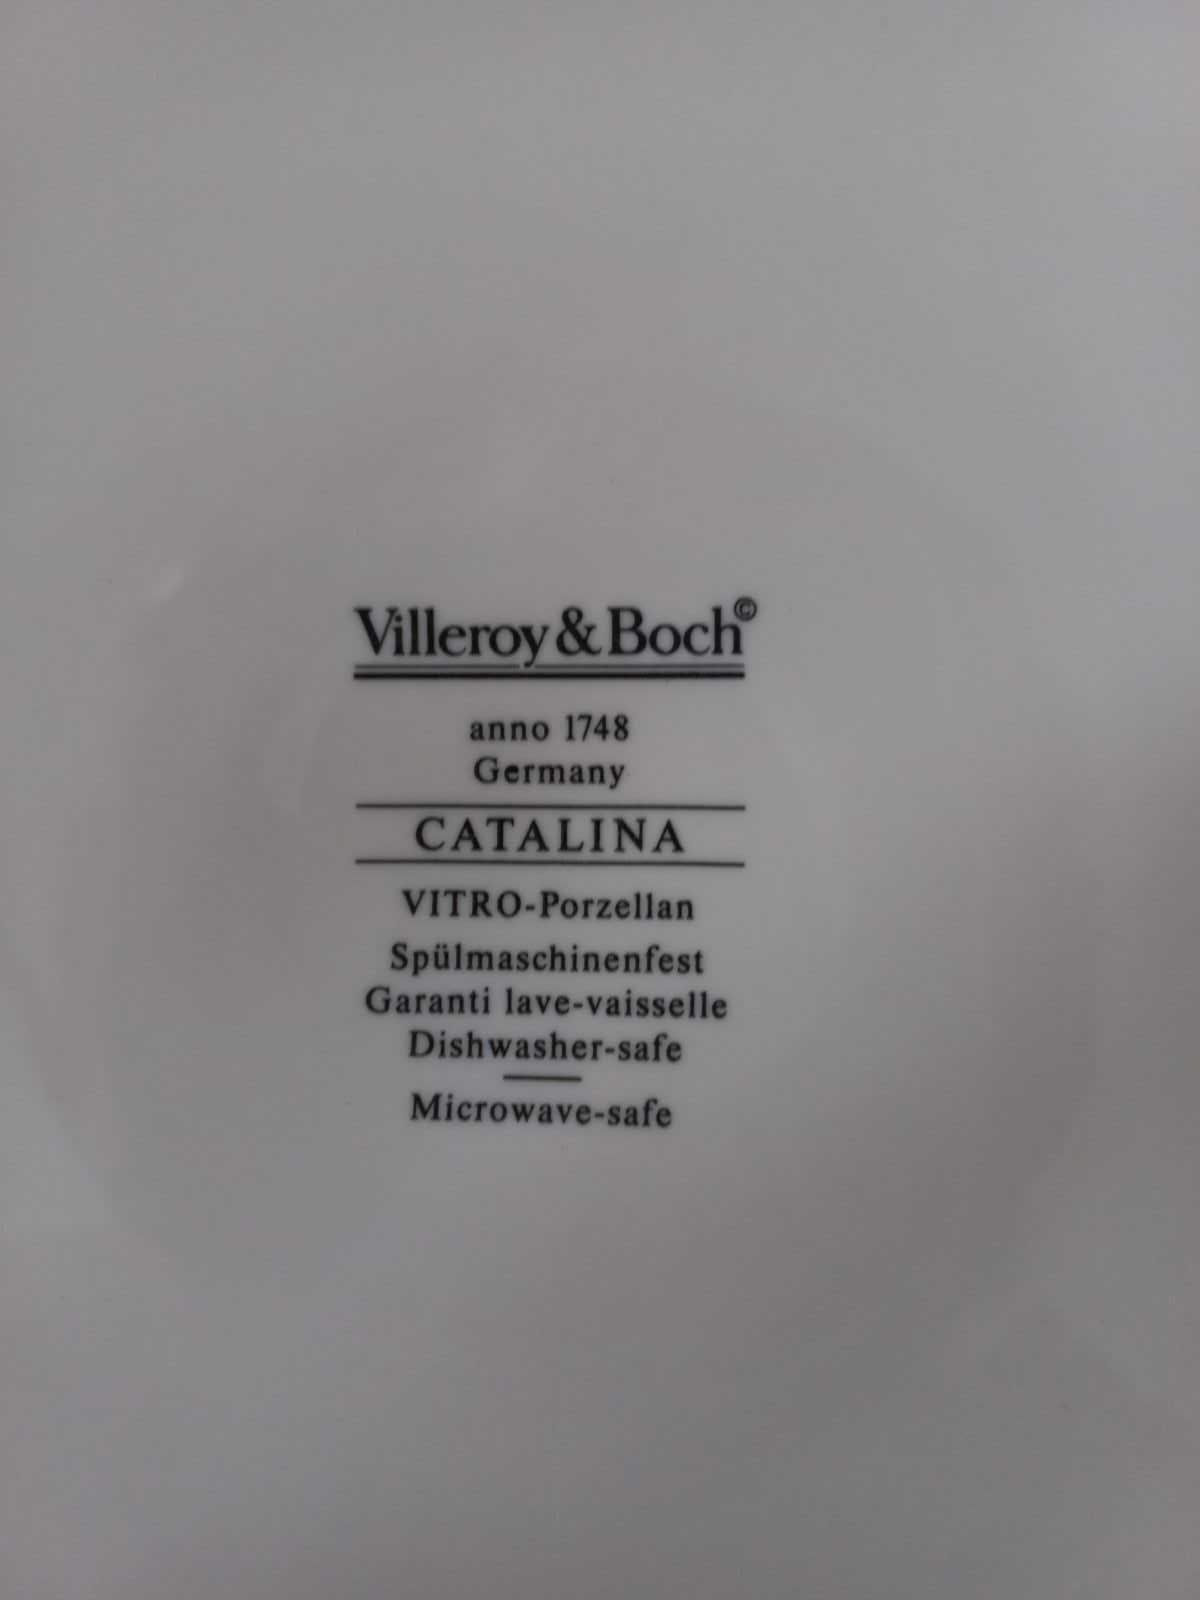 Śliczna Waza Villeroy & Boch do zupy Elegancka Catalina